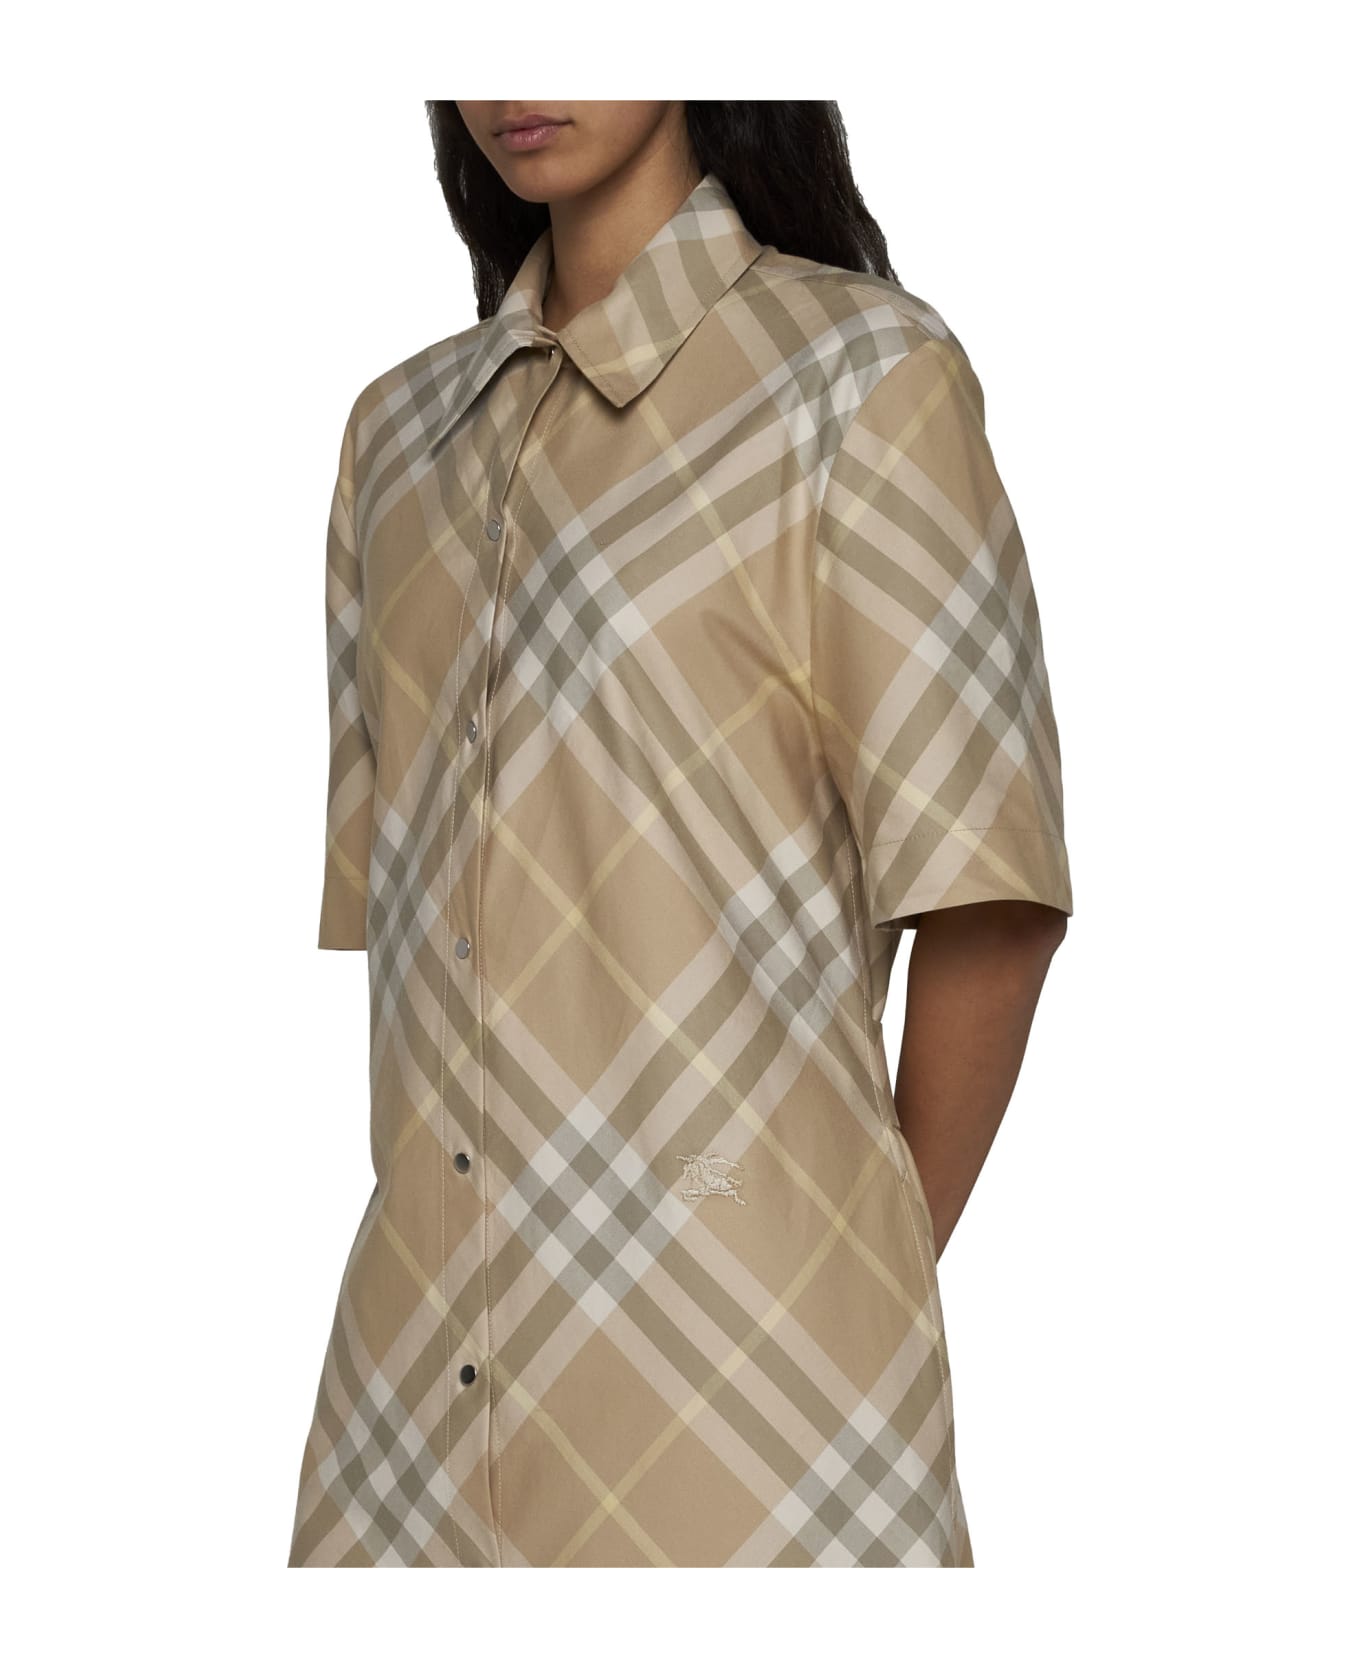 Burberry Vintage-check Short-sleeved Shirt Dress - Flax ip check